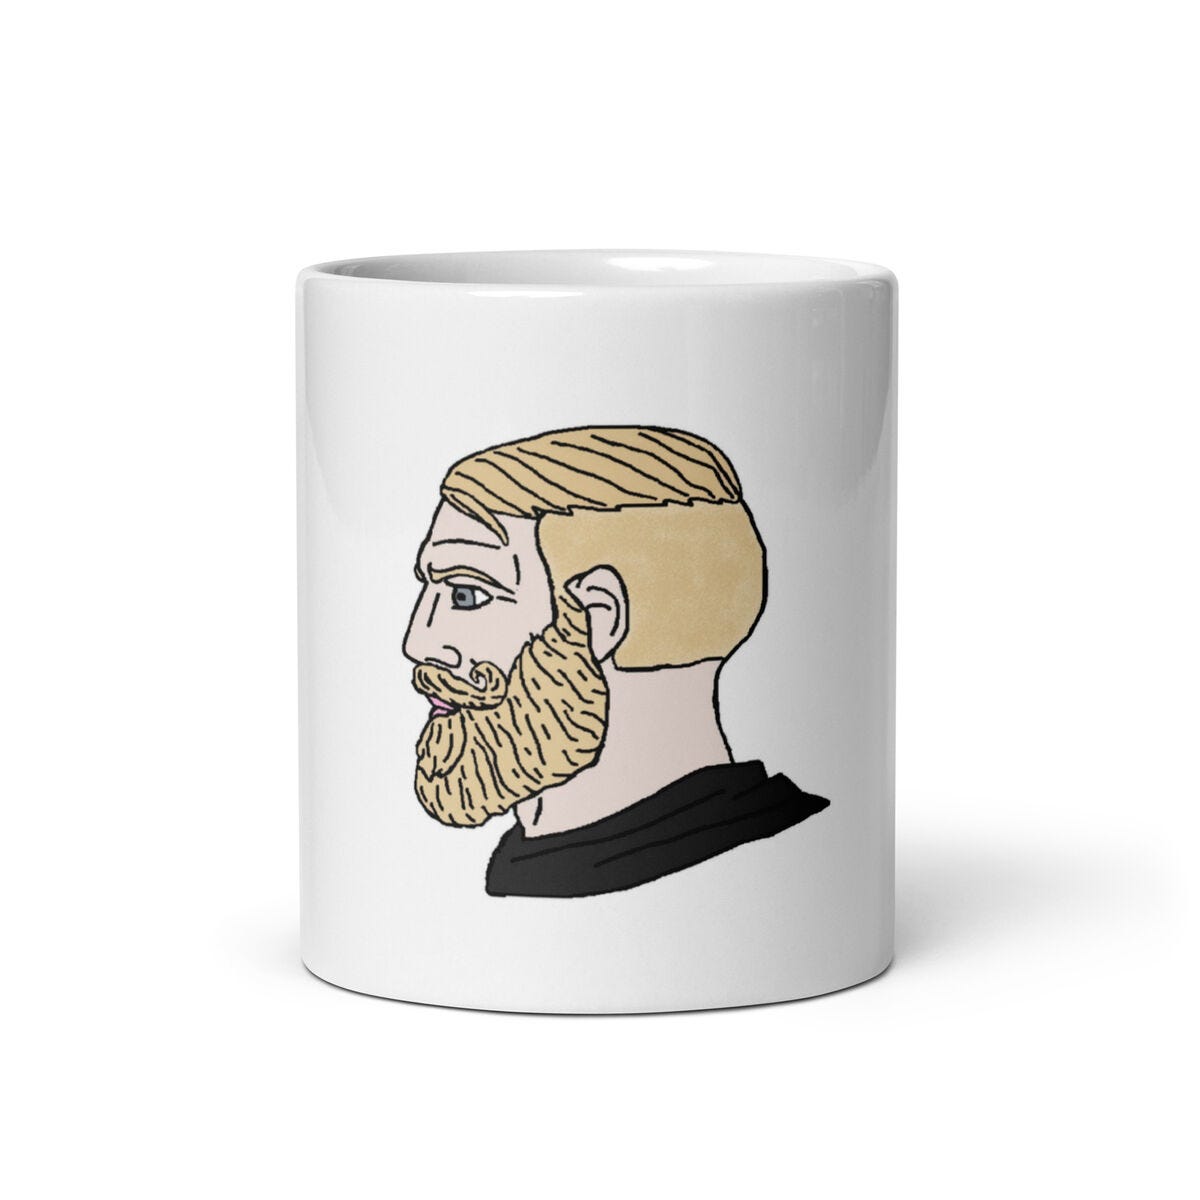 Yes Chad mug - Nordic gamer Wojak meme fan merch - ceramic coffee cup white  | eBay